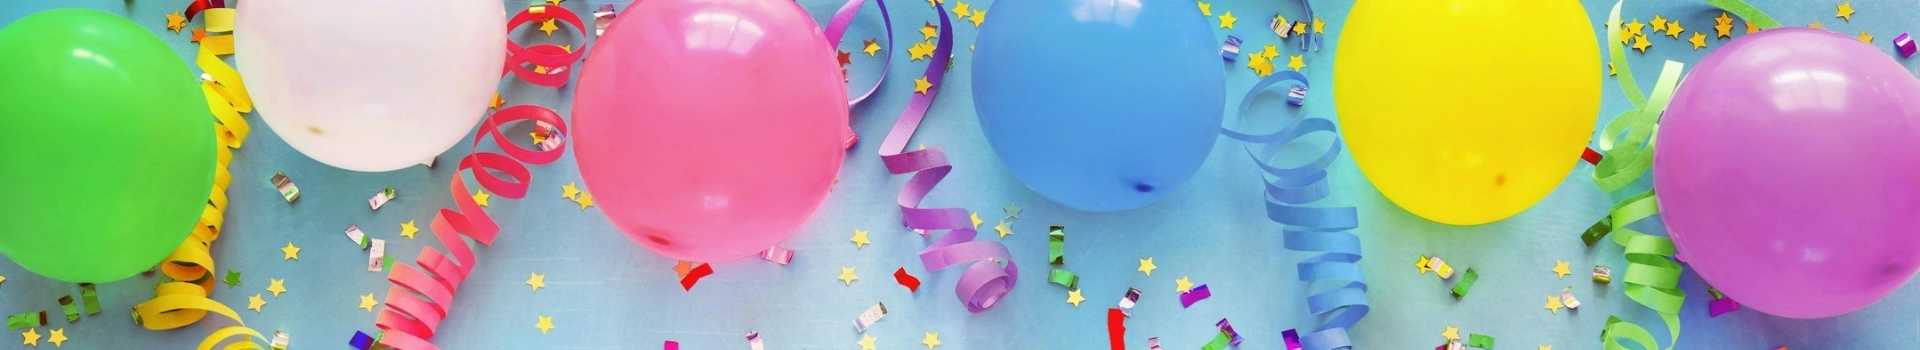 kolorowe balony, konfetti